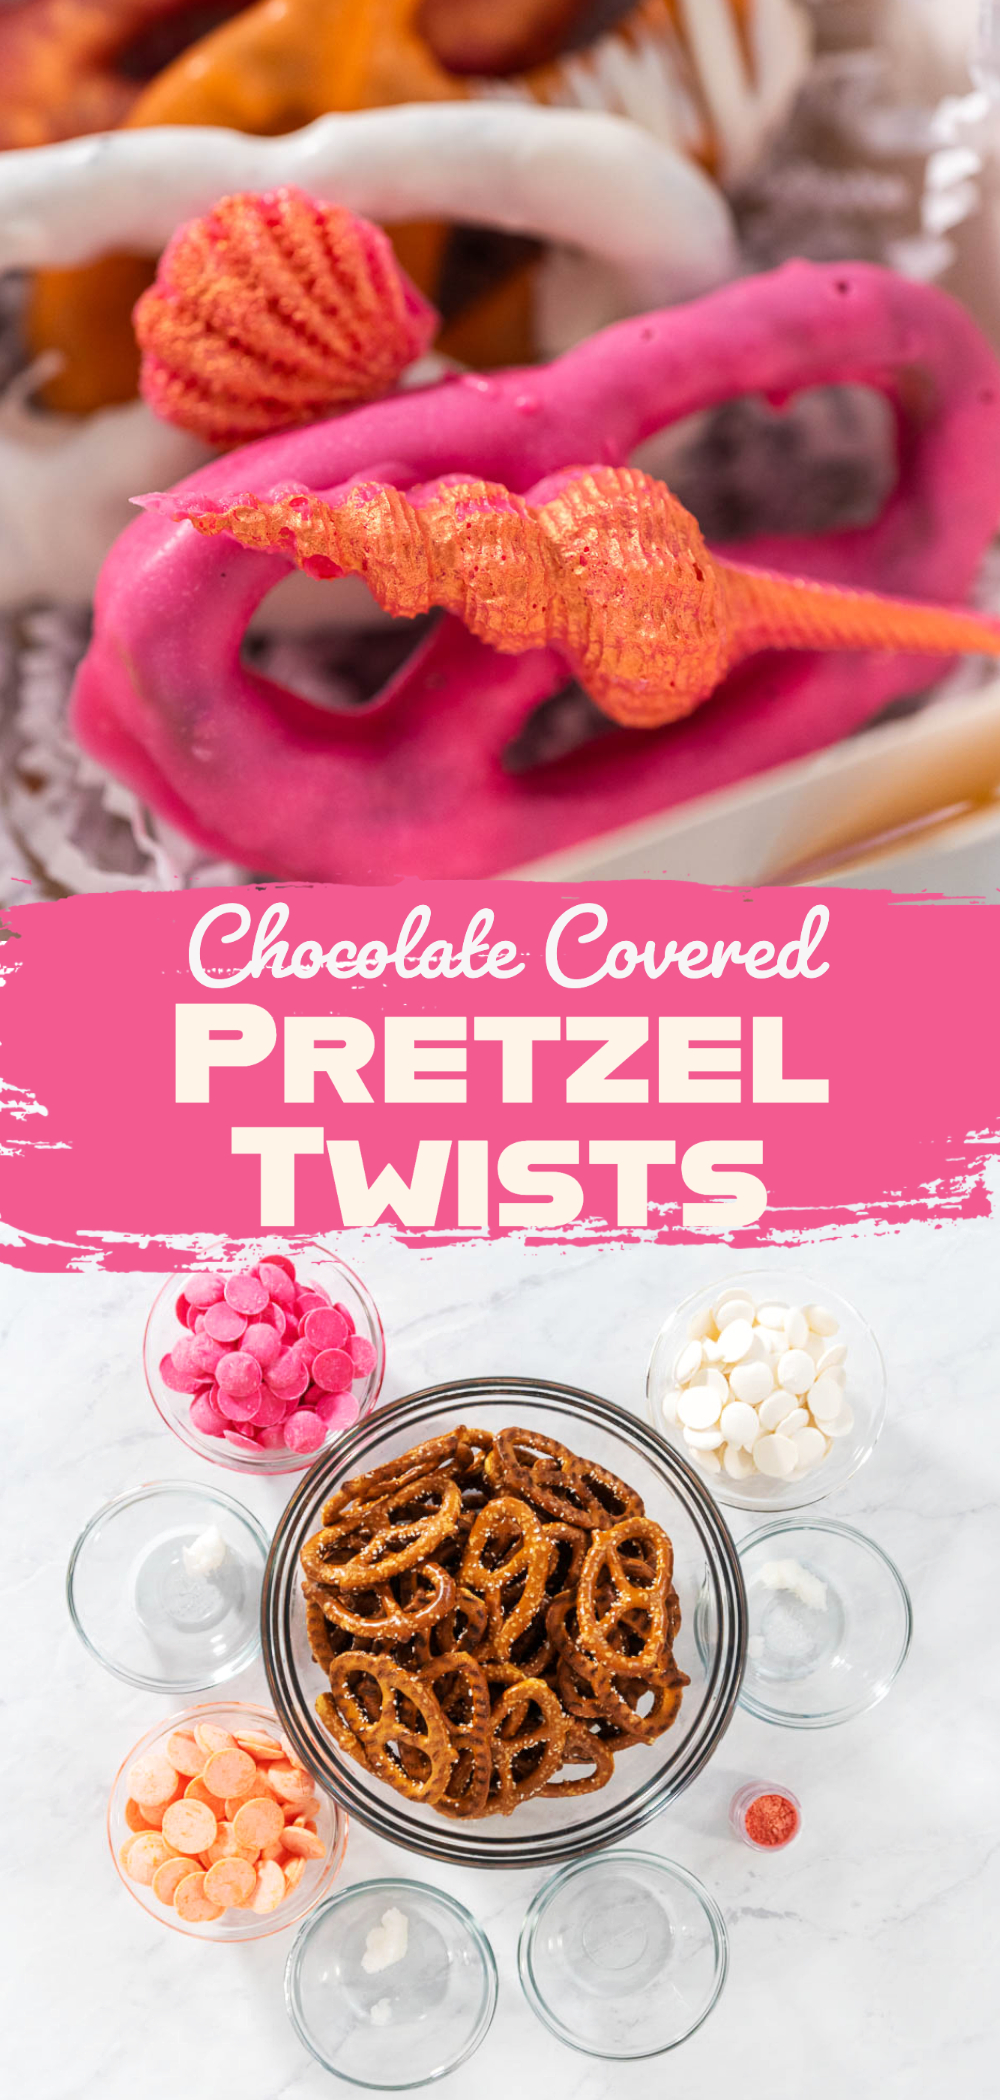 Gourmet Chocolate Covered Pretzel Twists